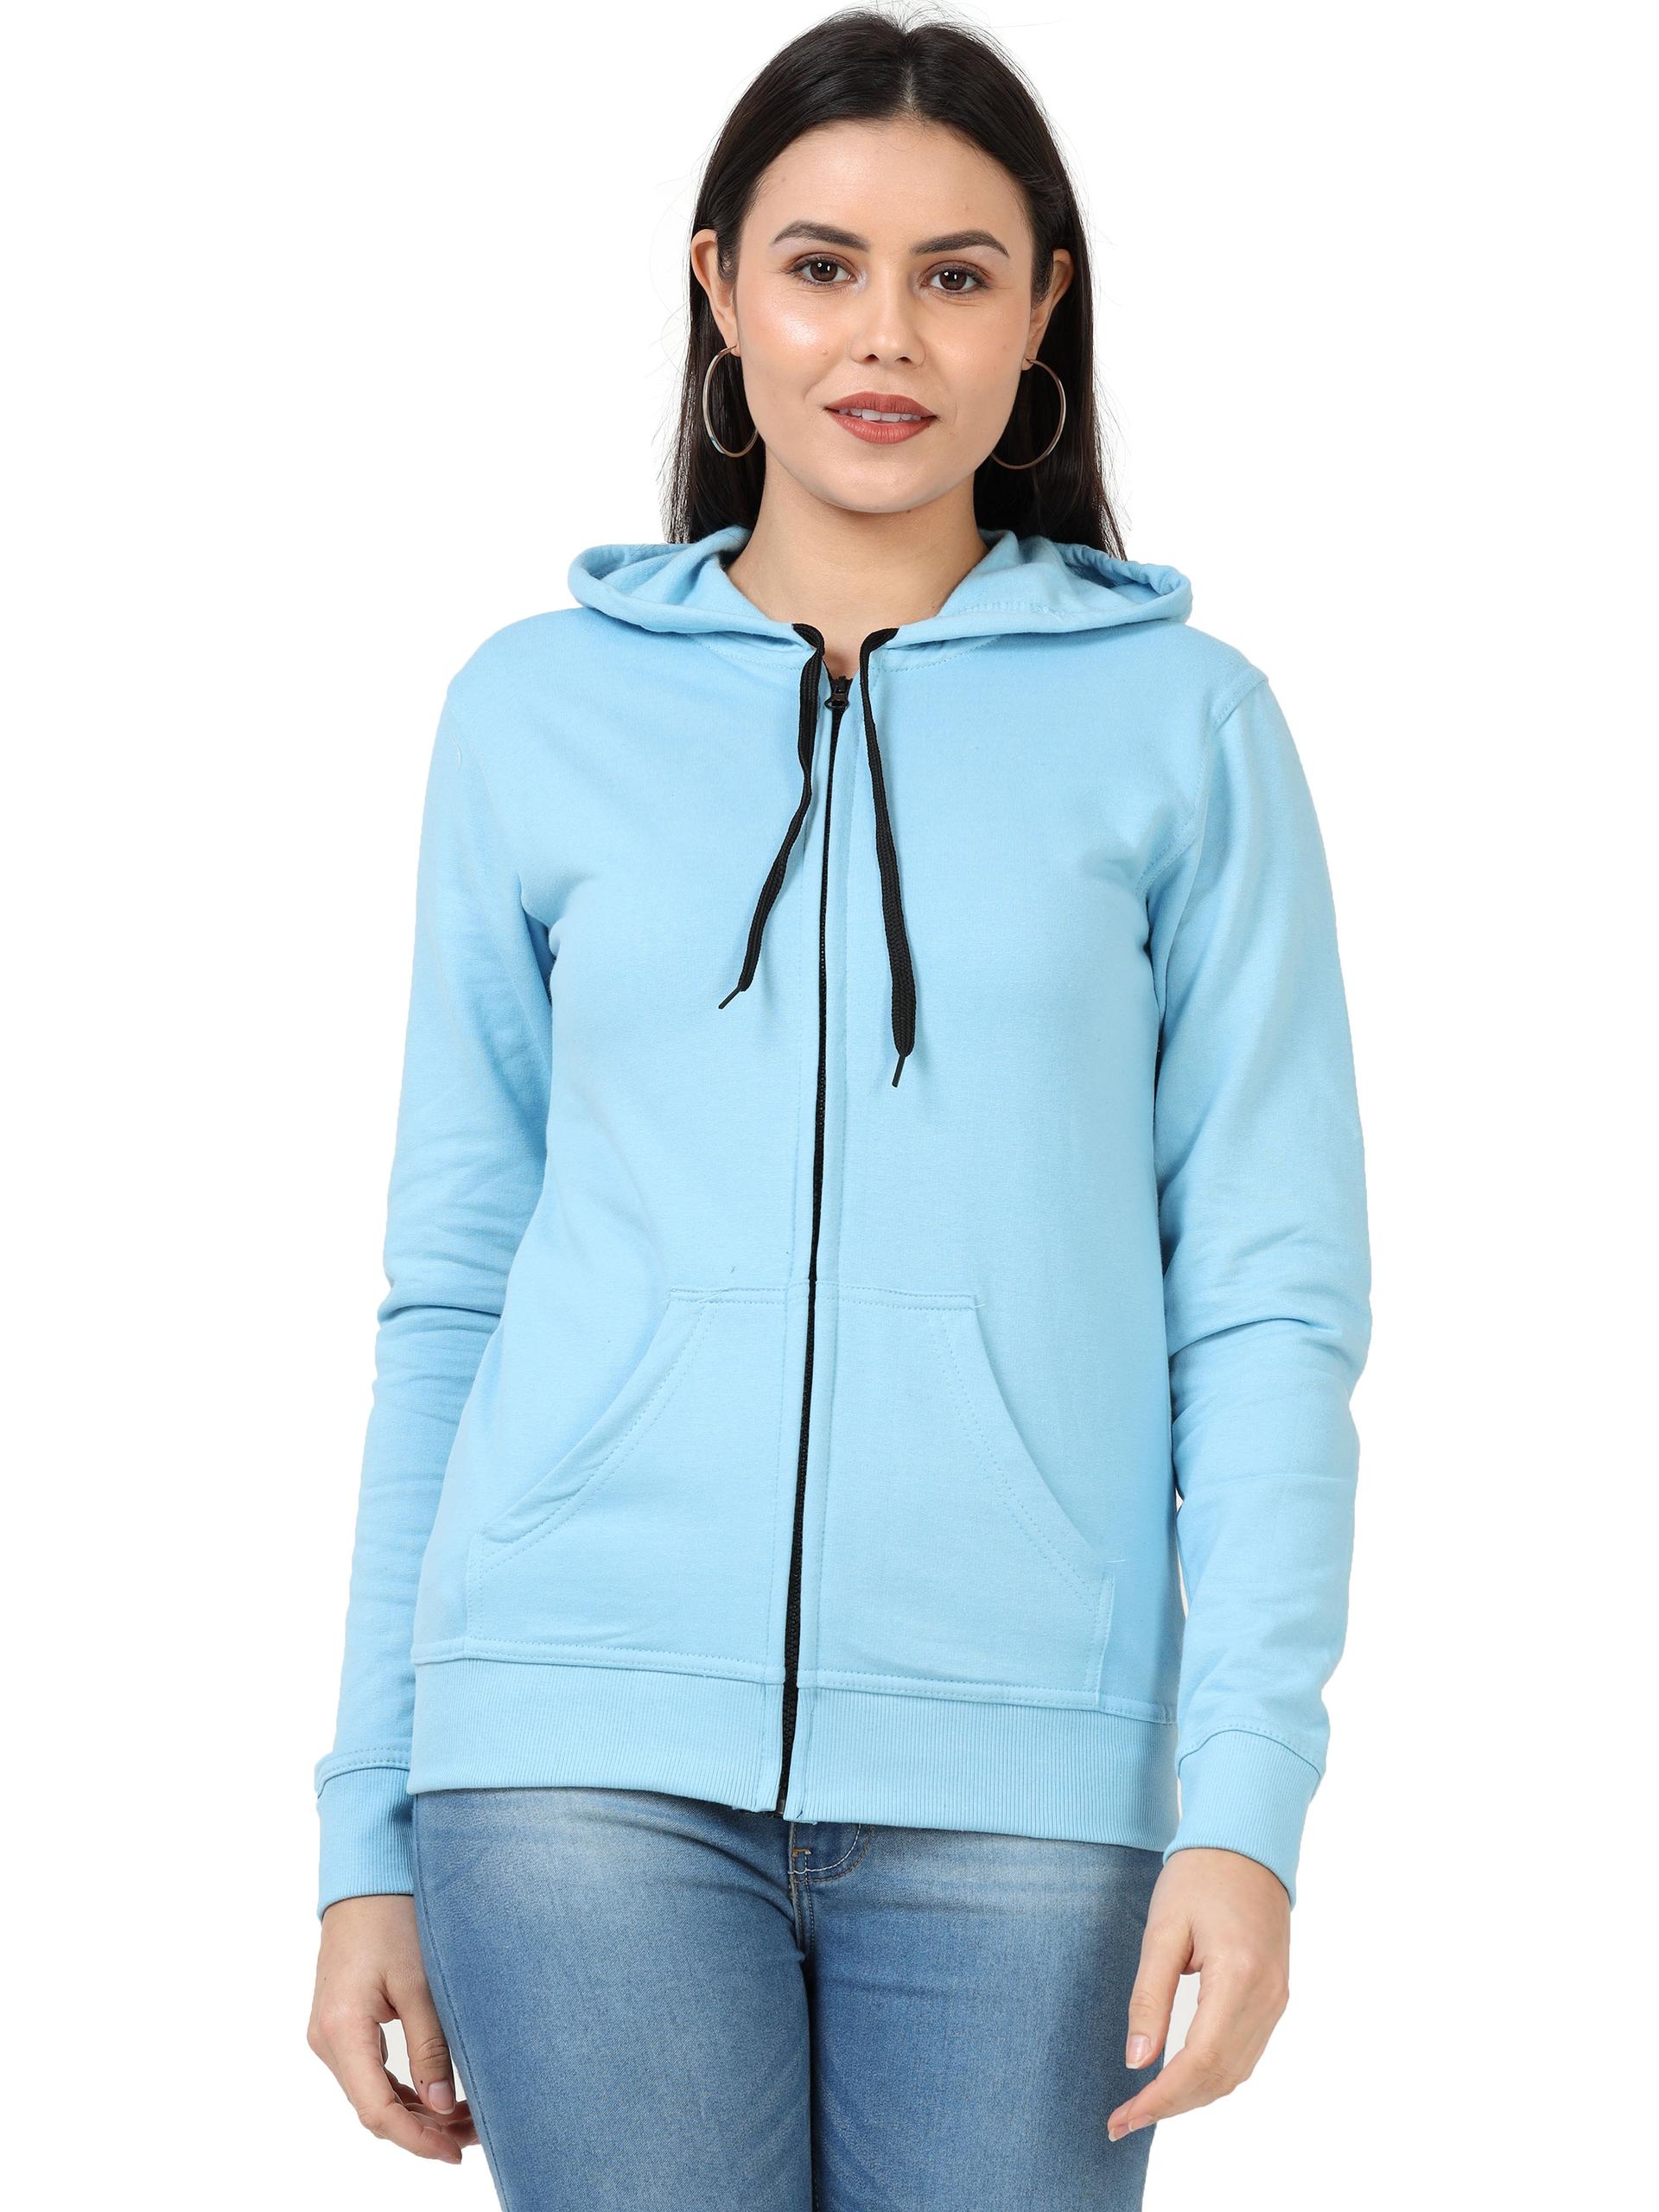 women's cotton plain full sleeve sky blue color hoodies/sweatshirt